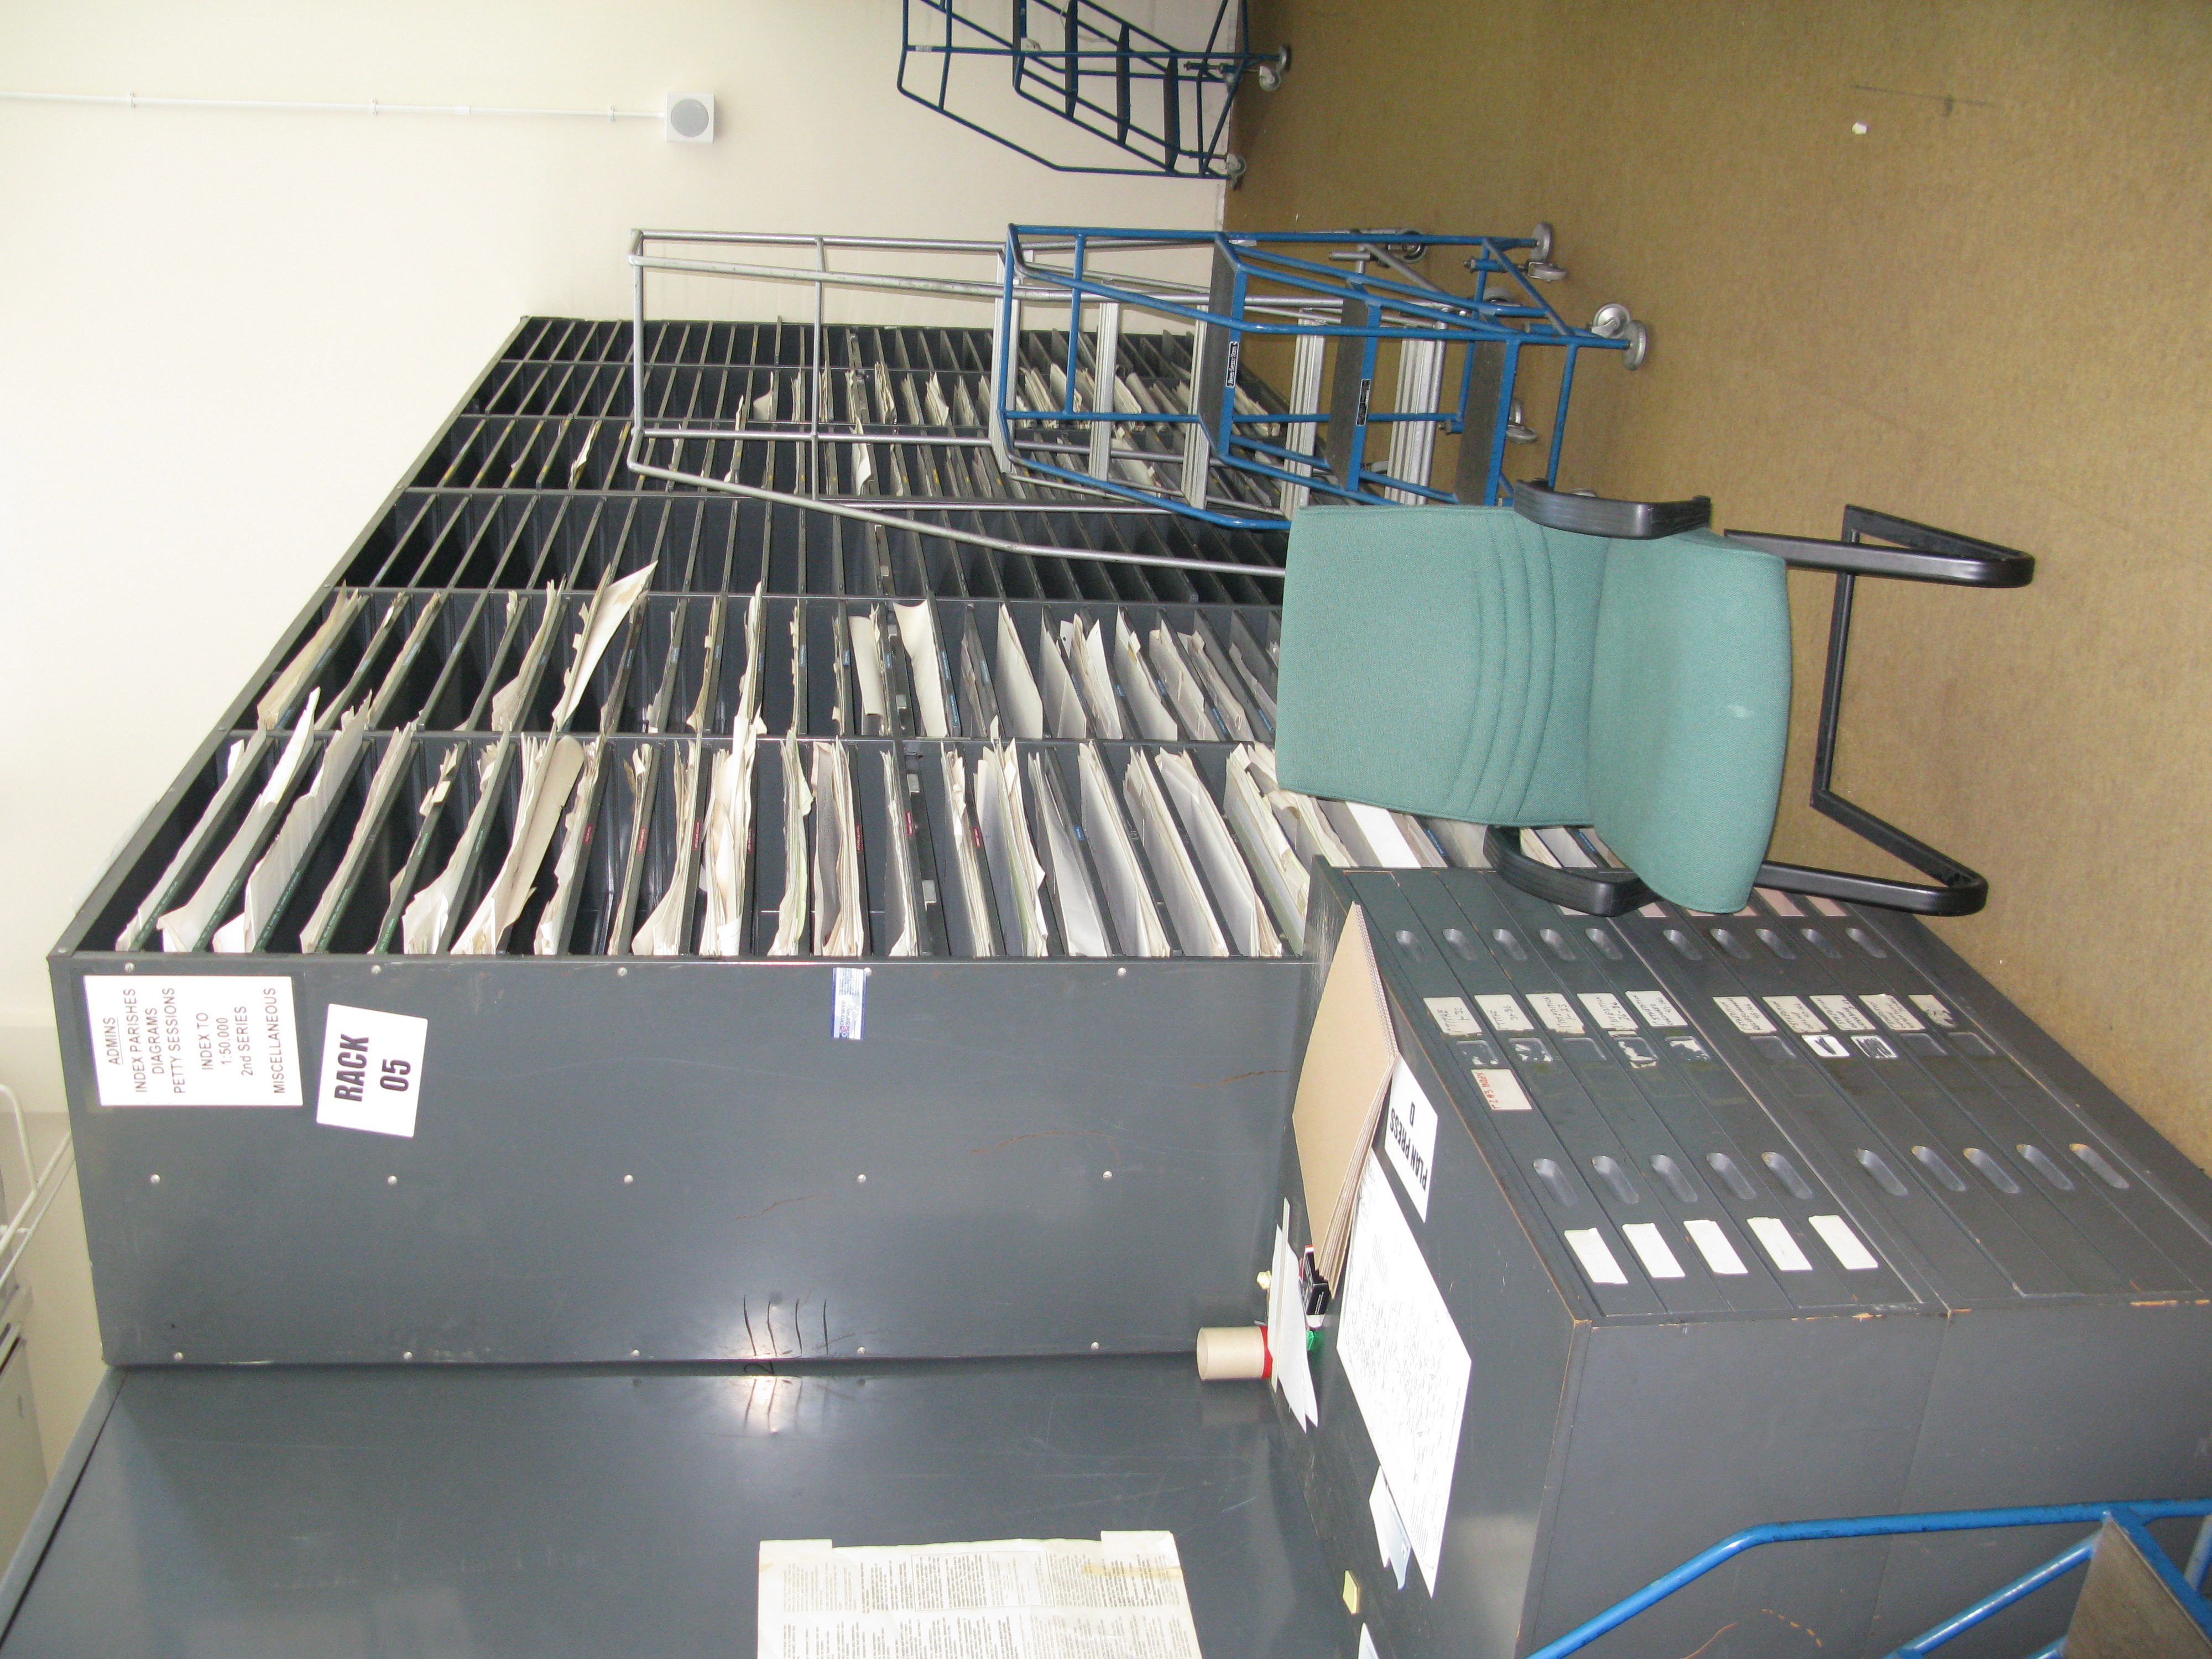 W415 HMA - plan press, map racks and ladders